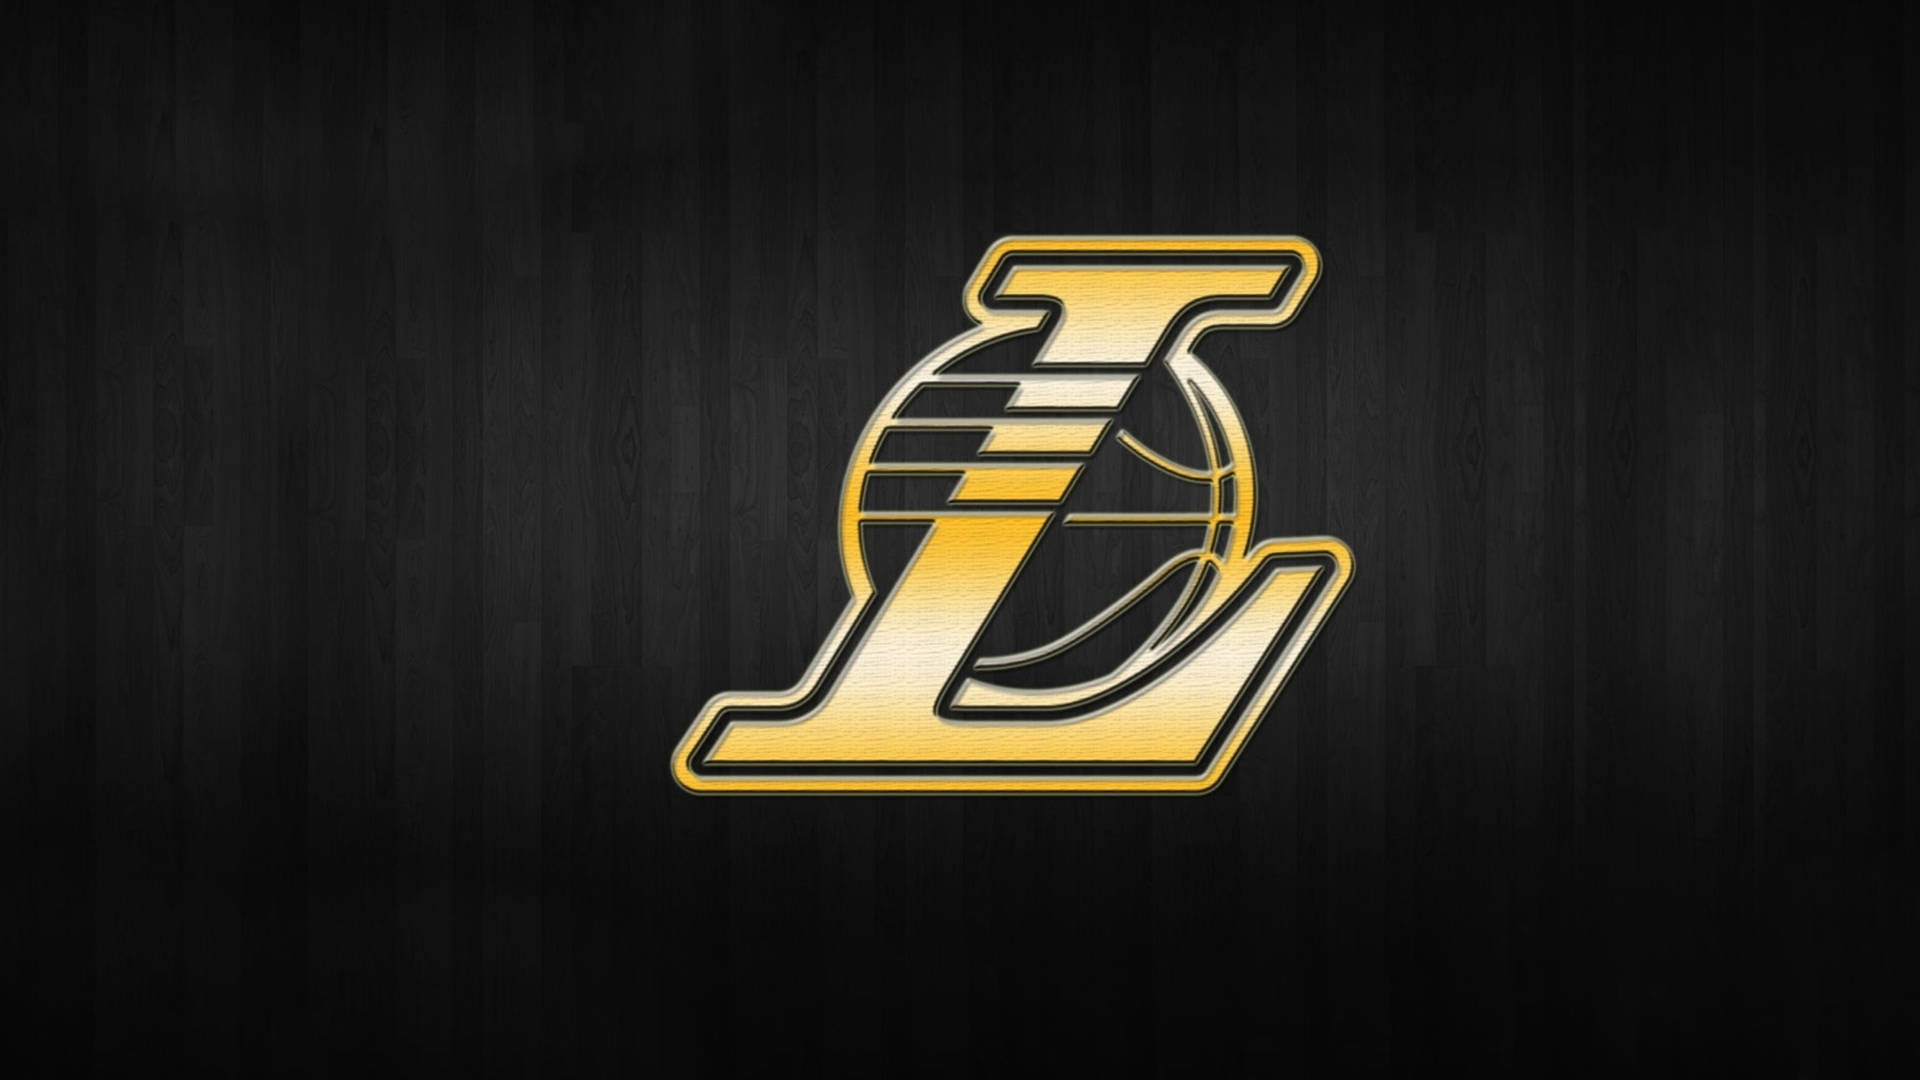 Schwarzesund Goldenes La Lakers-logo Wallpaper